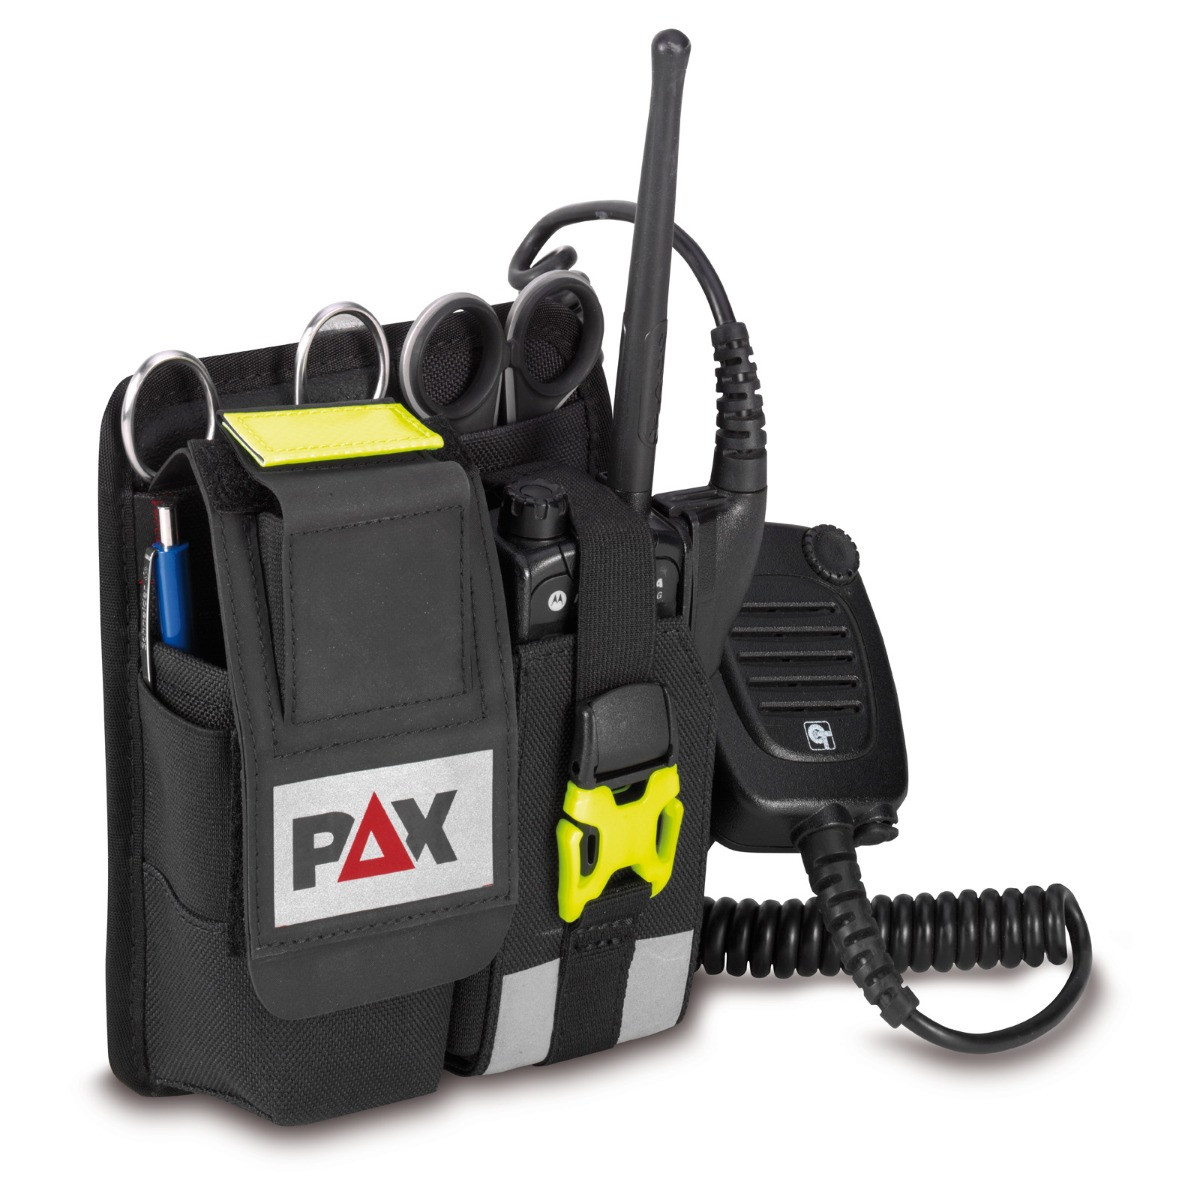 PAX Pro-Series Funkgeräteholster L